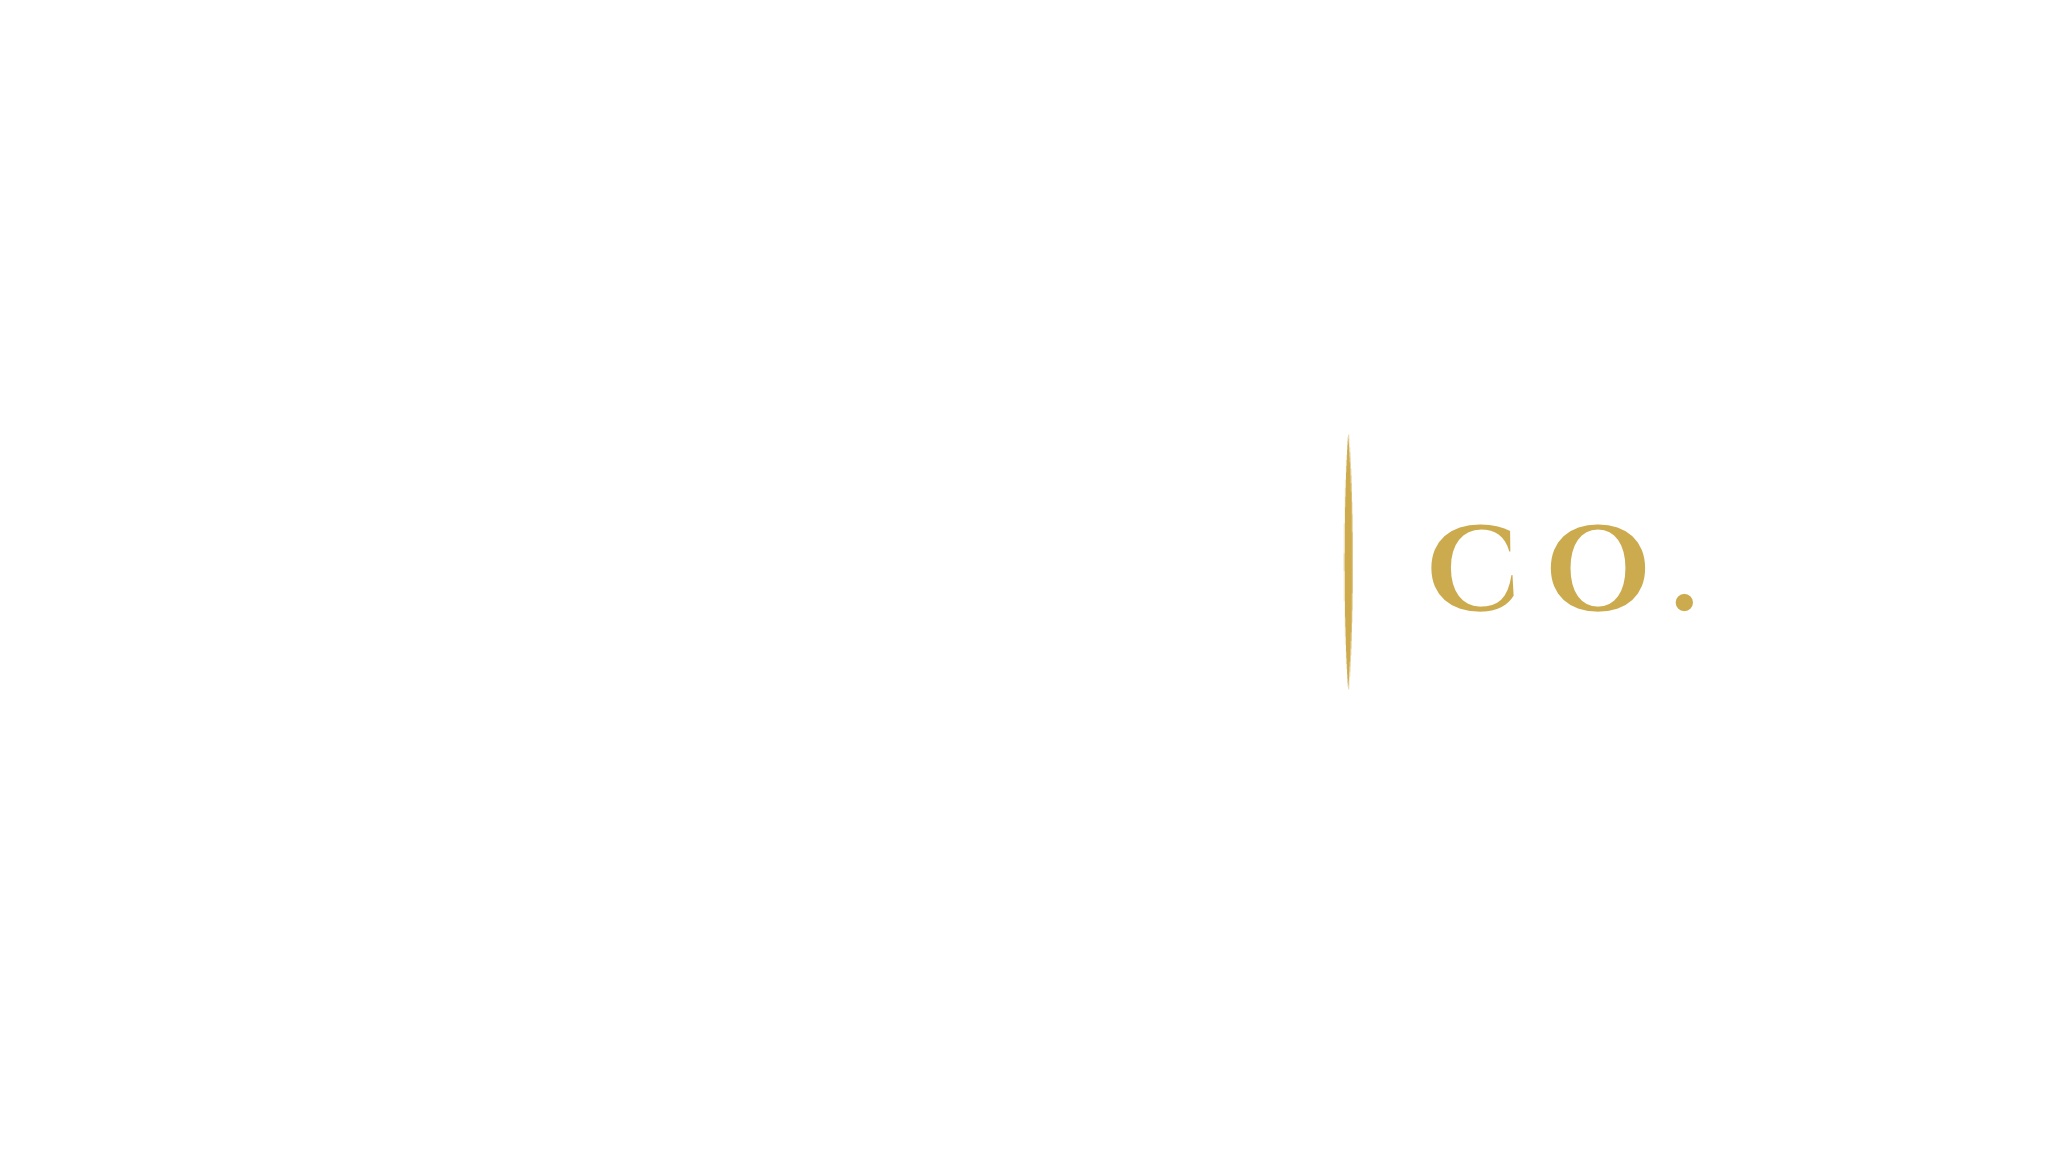 Our Classes, Yoga Revive